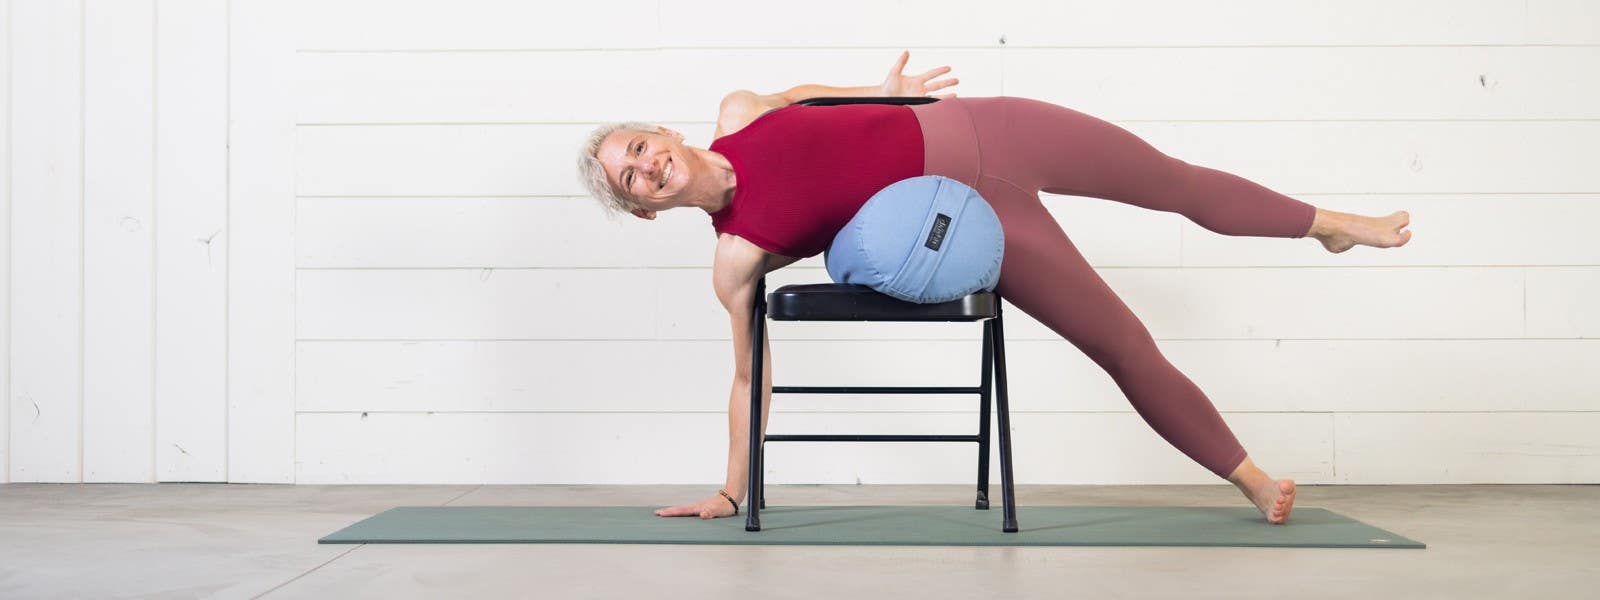 Standing yoga poses with chair - Iyengar Yoga - YouTube